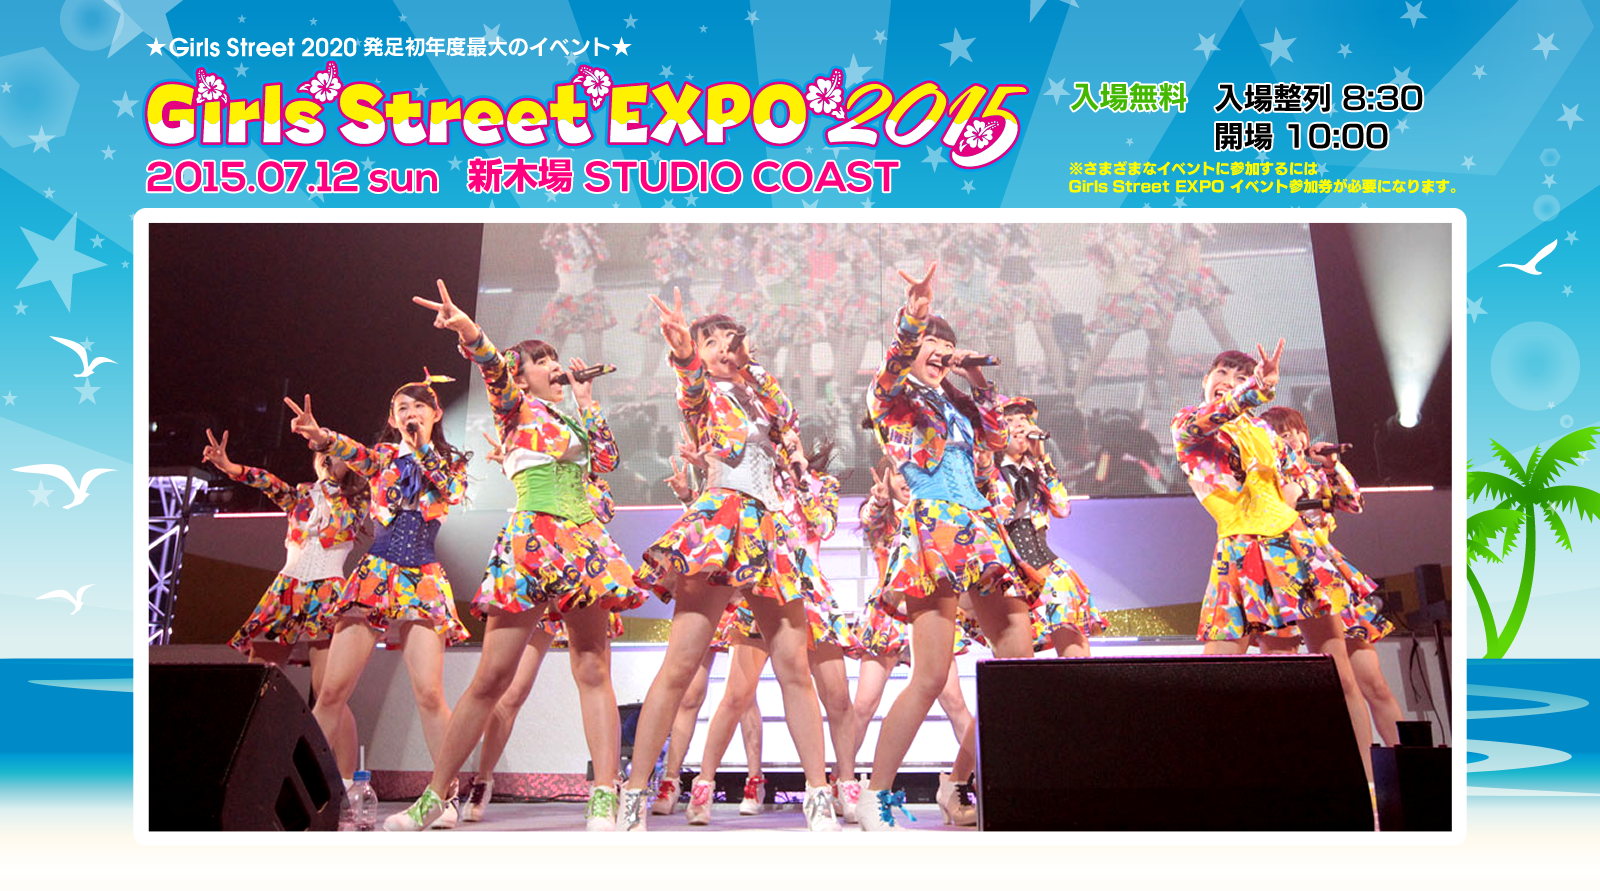 Girls Street 2020 発足初年度最大のイベント★Girls Street EXPO 2015